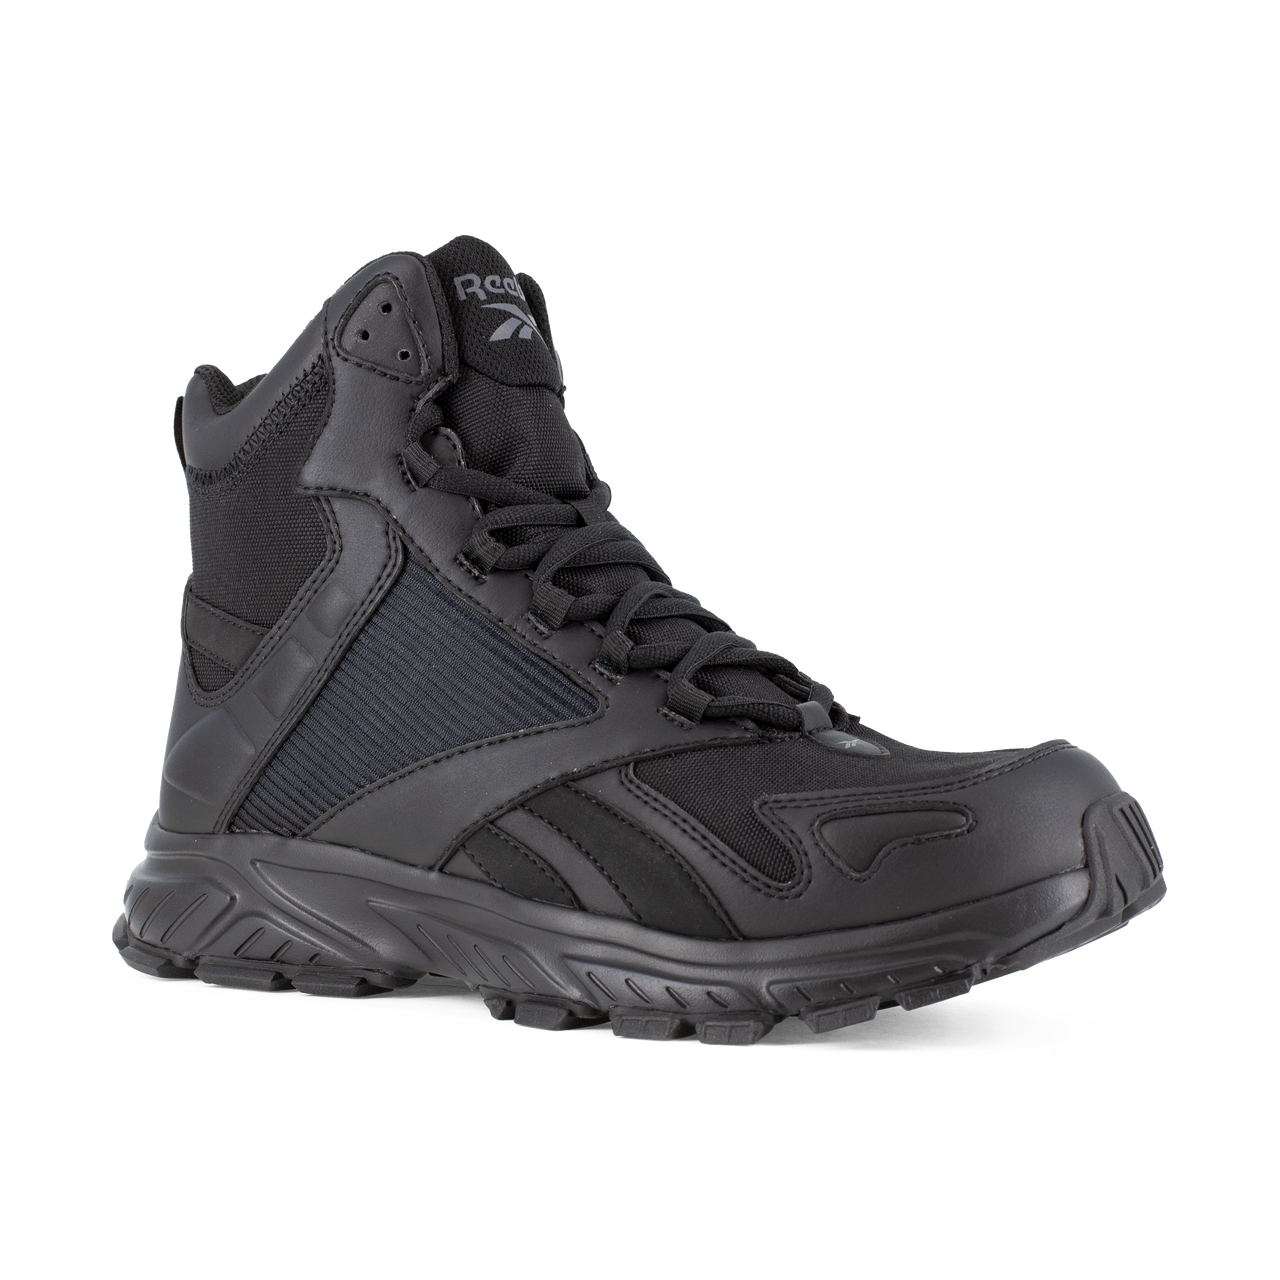 Reebok Tactical Hyperium Tactical 6" Men's Boot with Soft Toe - Black Tactical Gear Australia Supplier Distributor Dealer